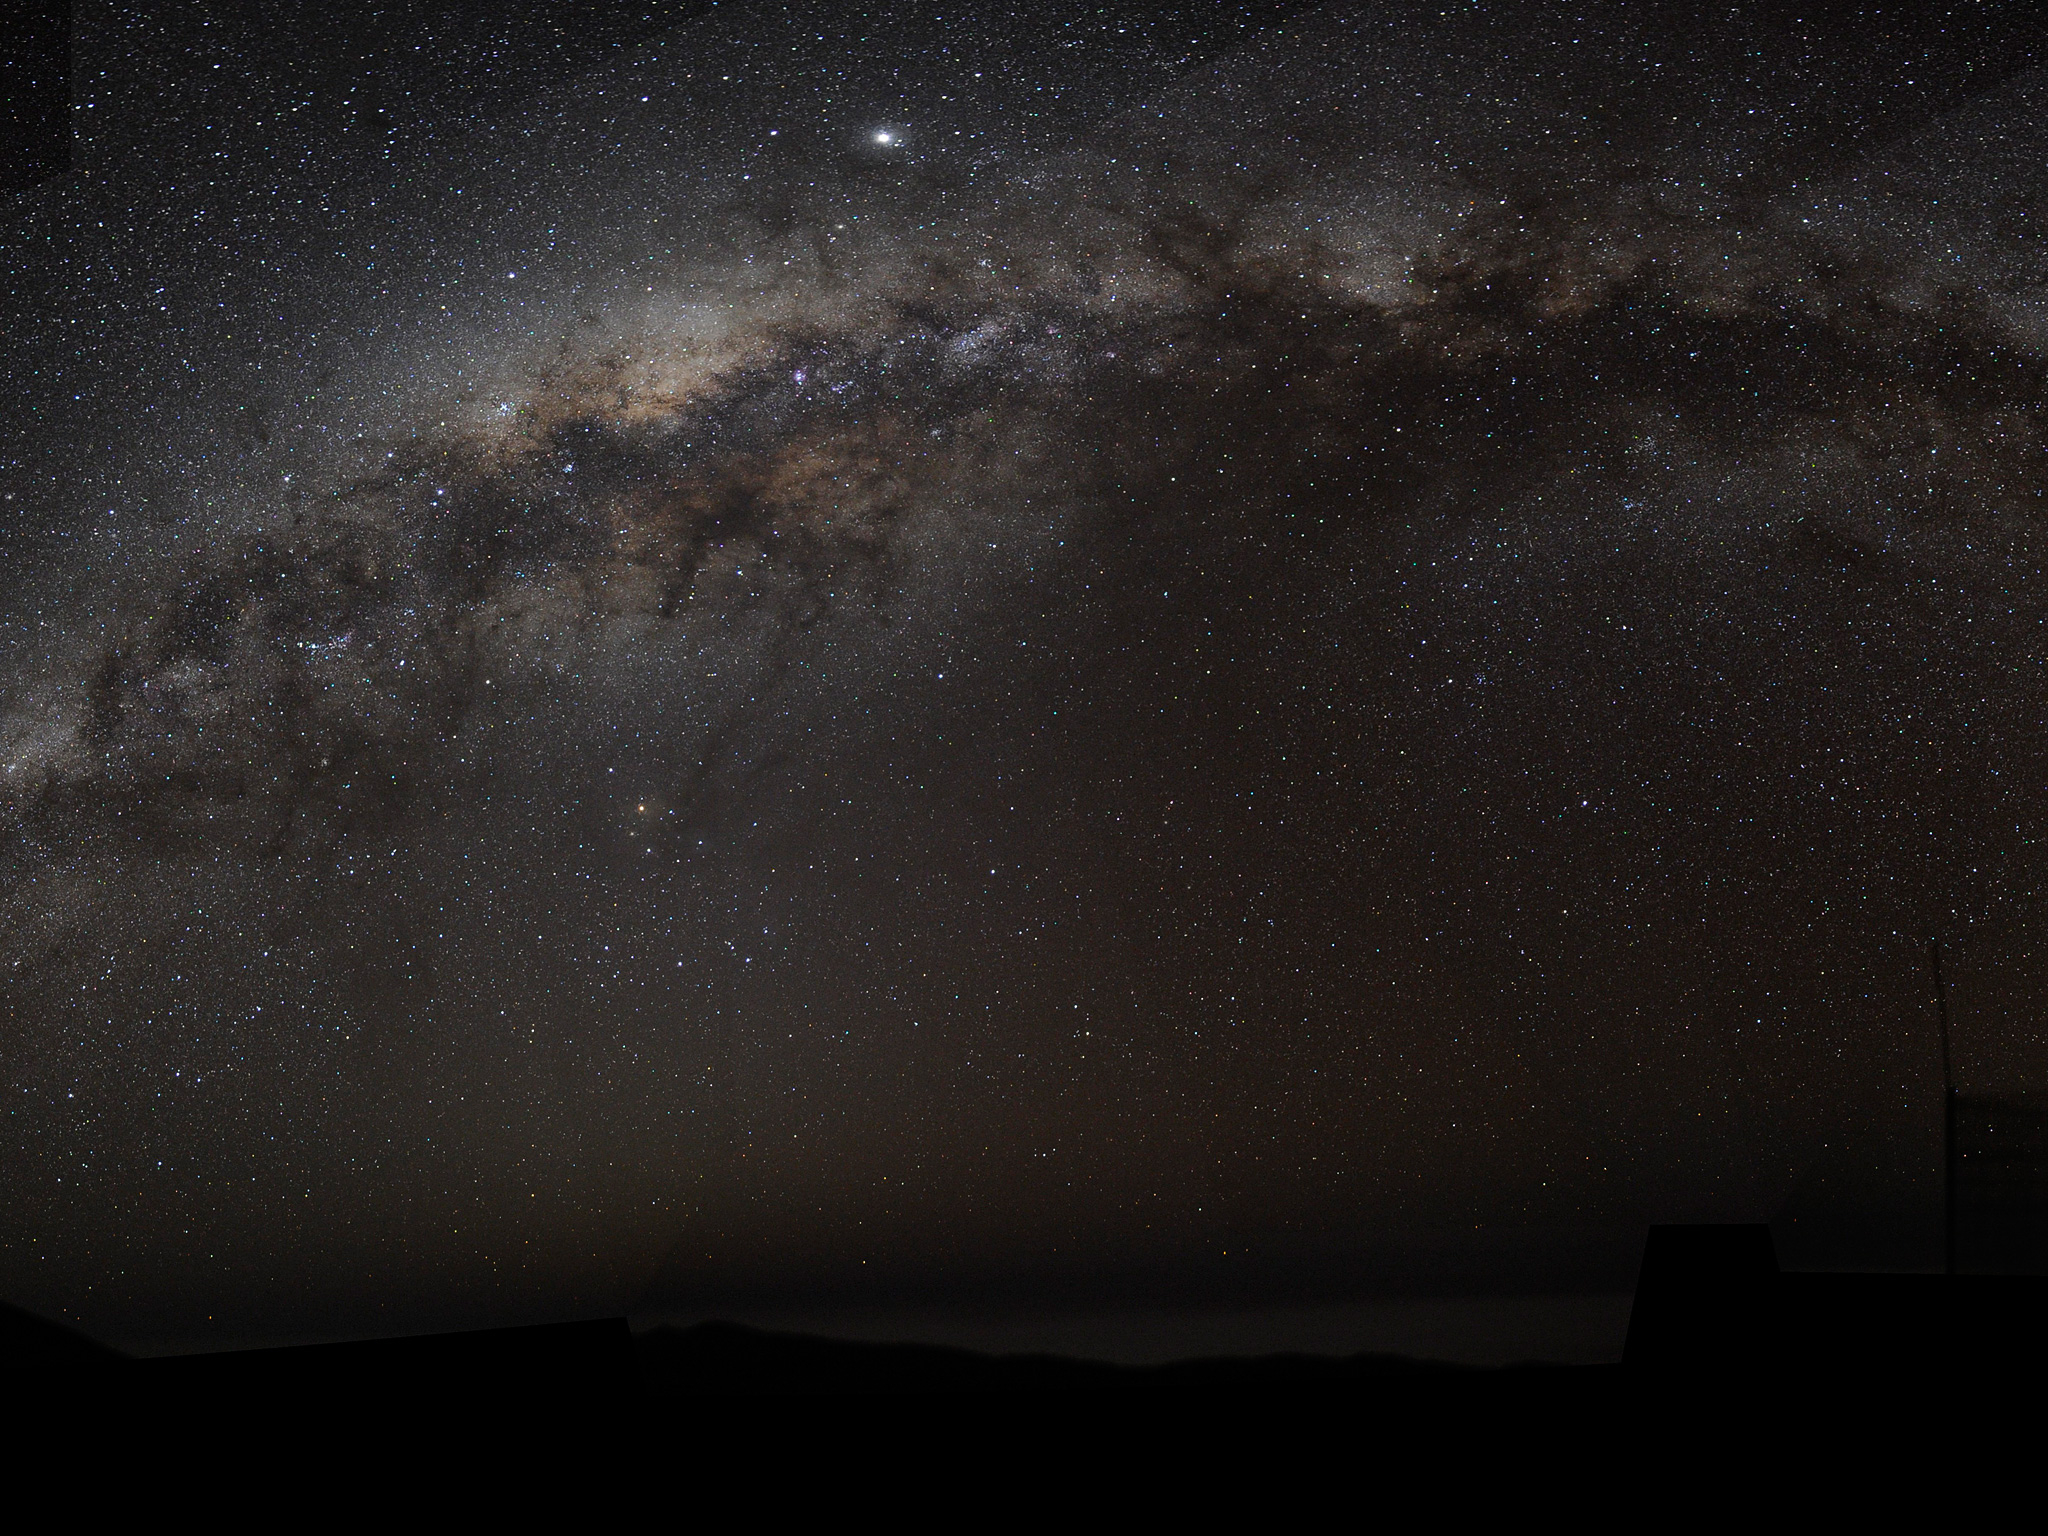 2048x1536 The Milky Way galaxy | ESO United States